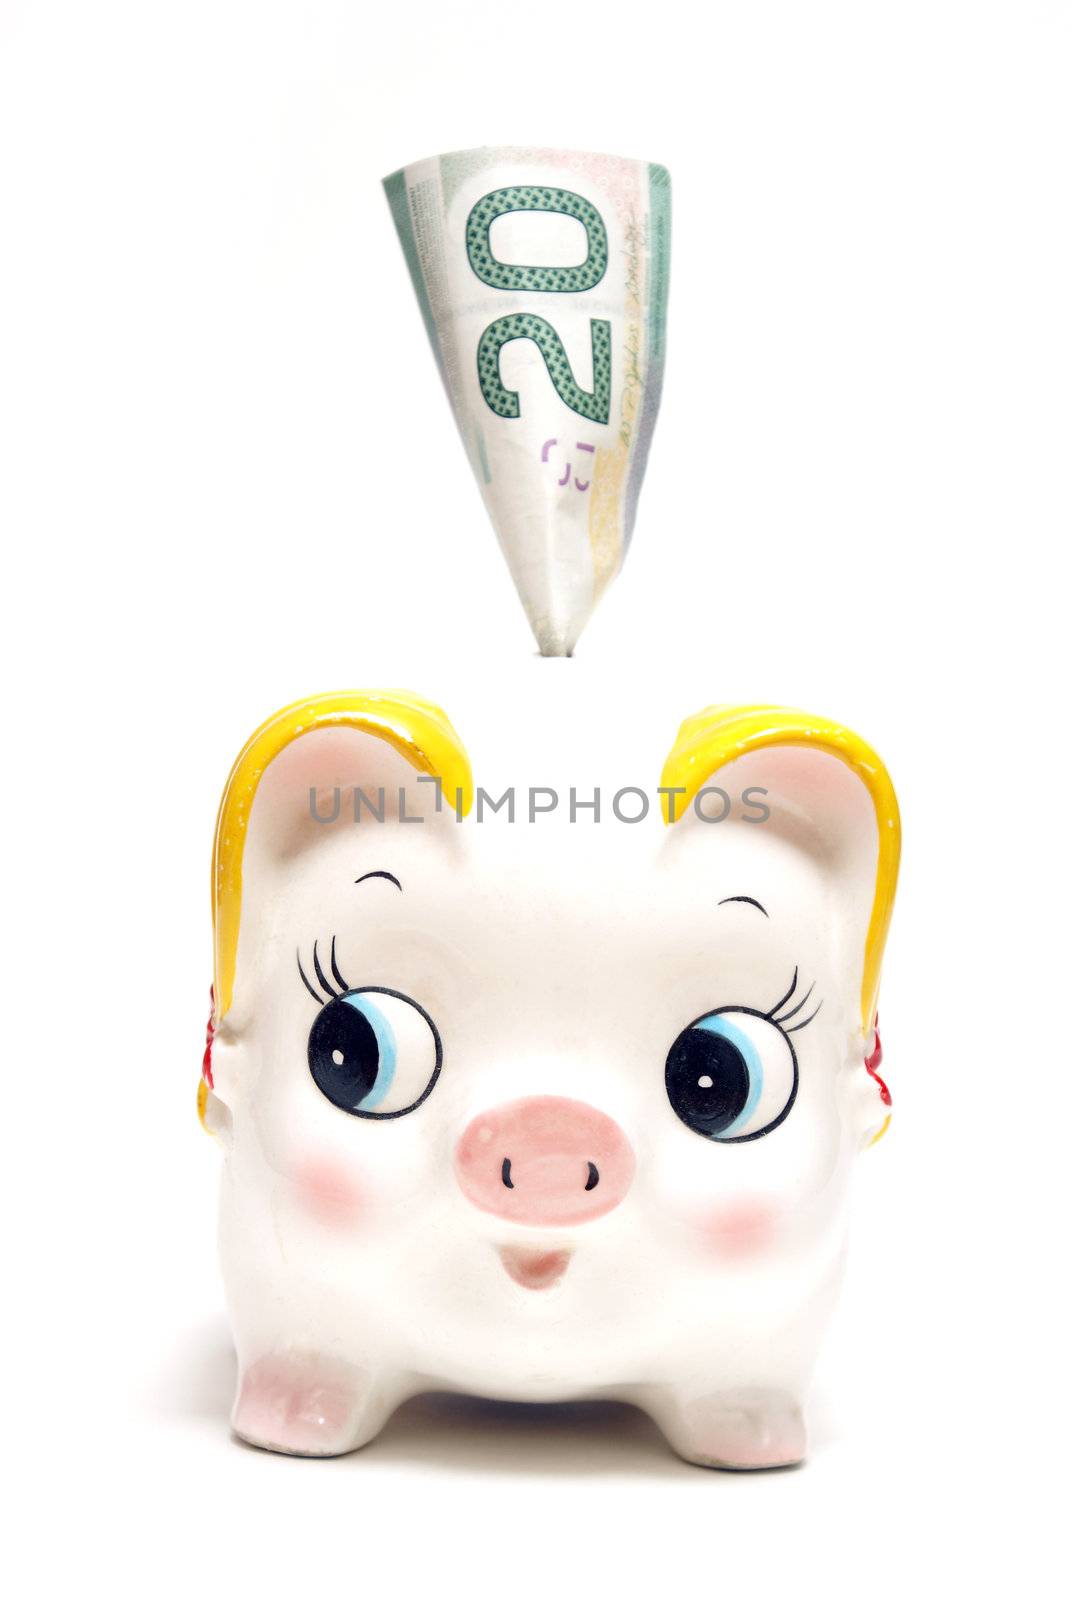 A piggy bank with a twenty dollar bill for the money saving mind set.